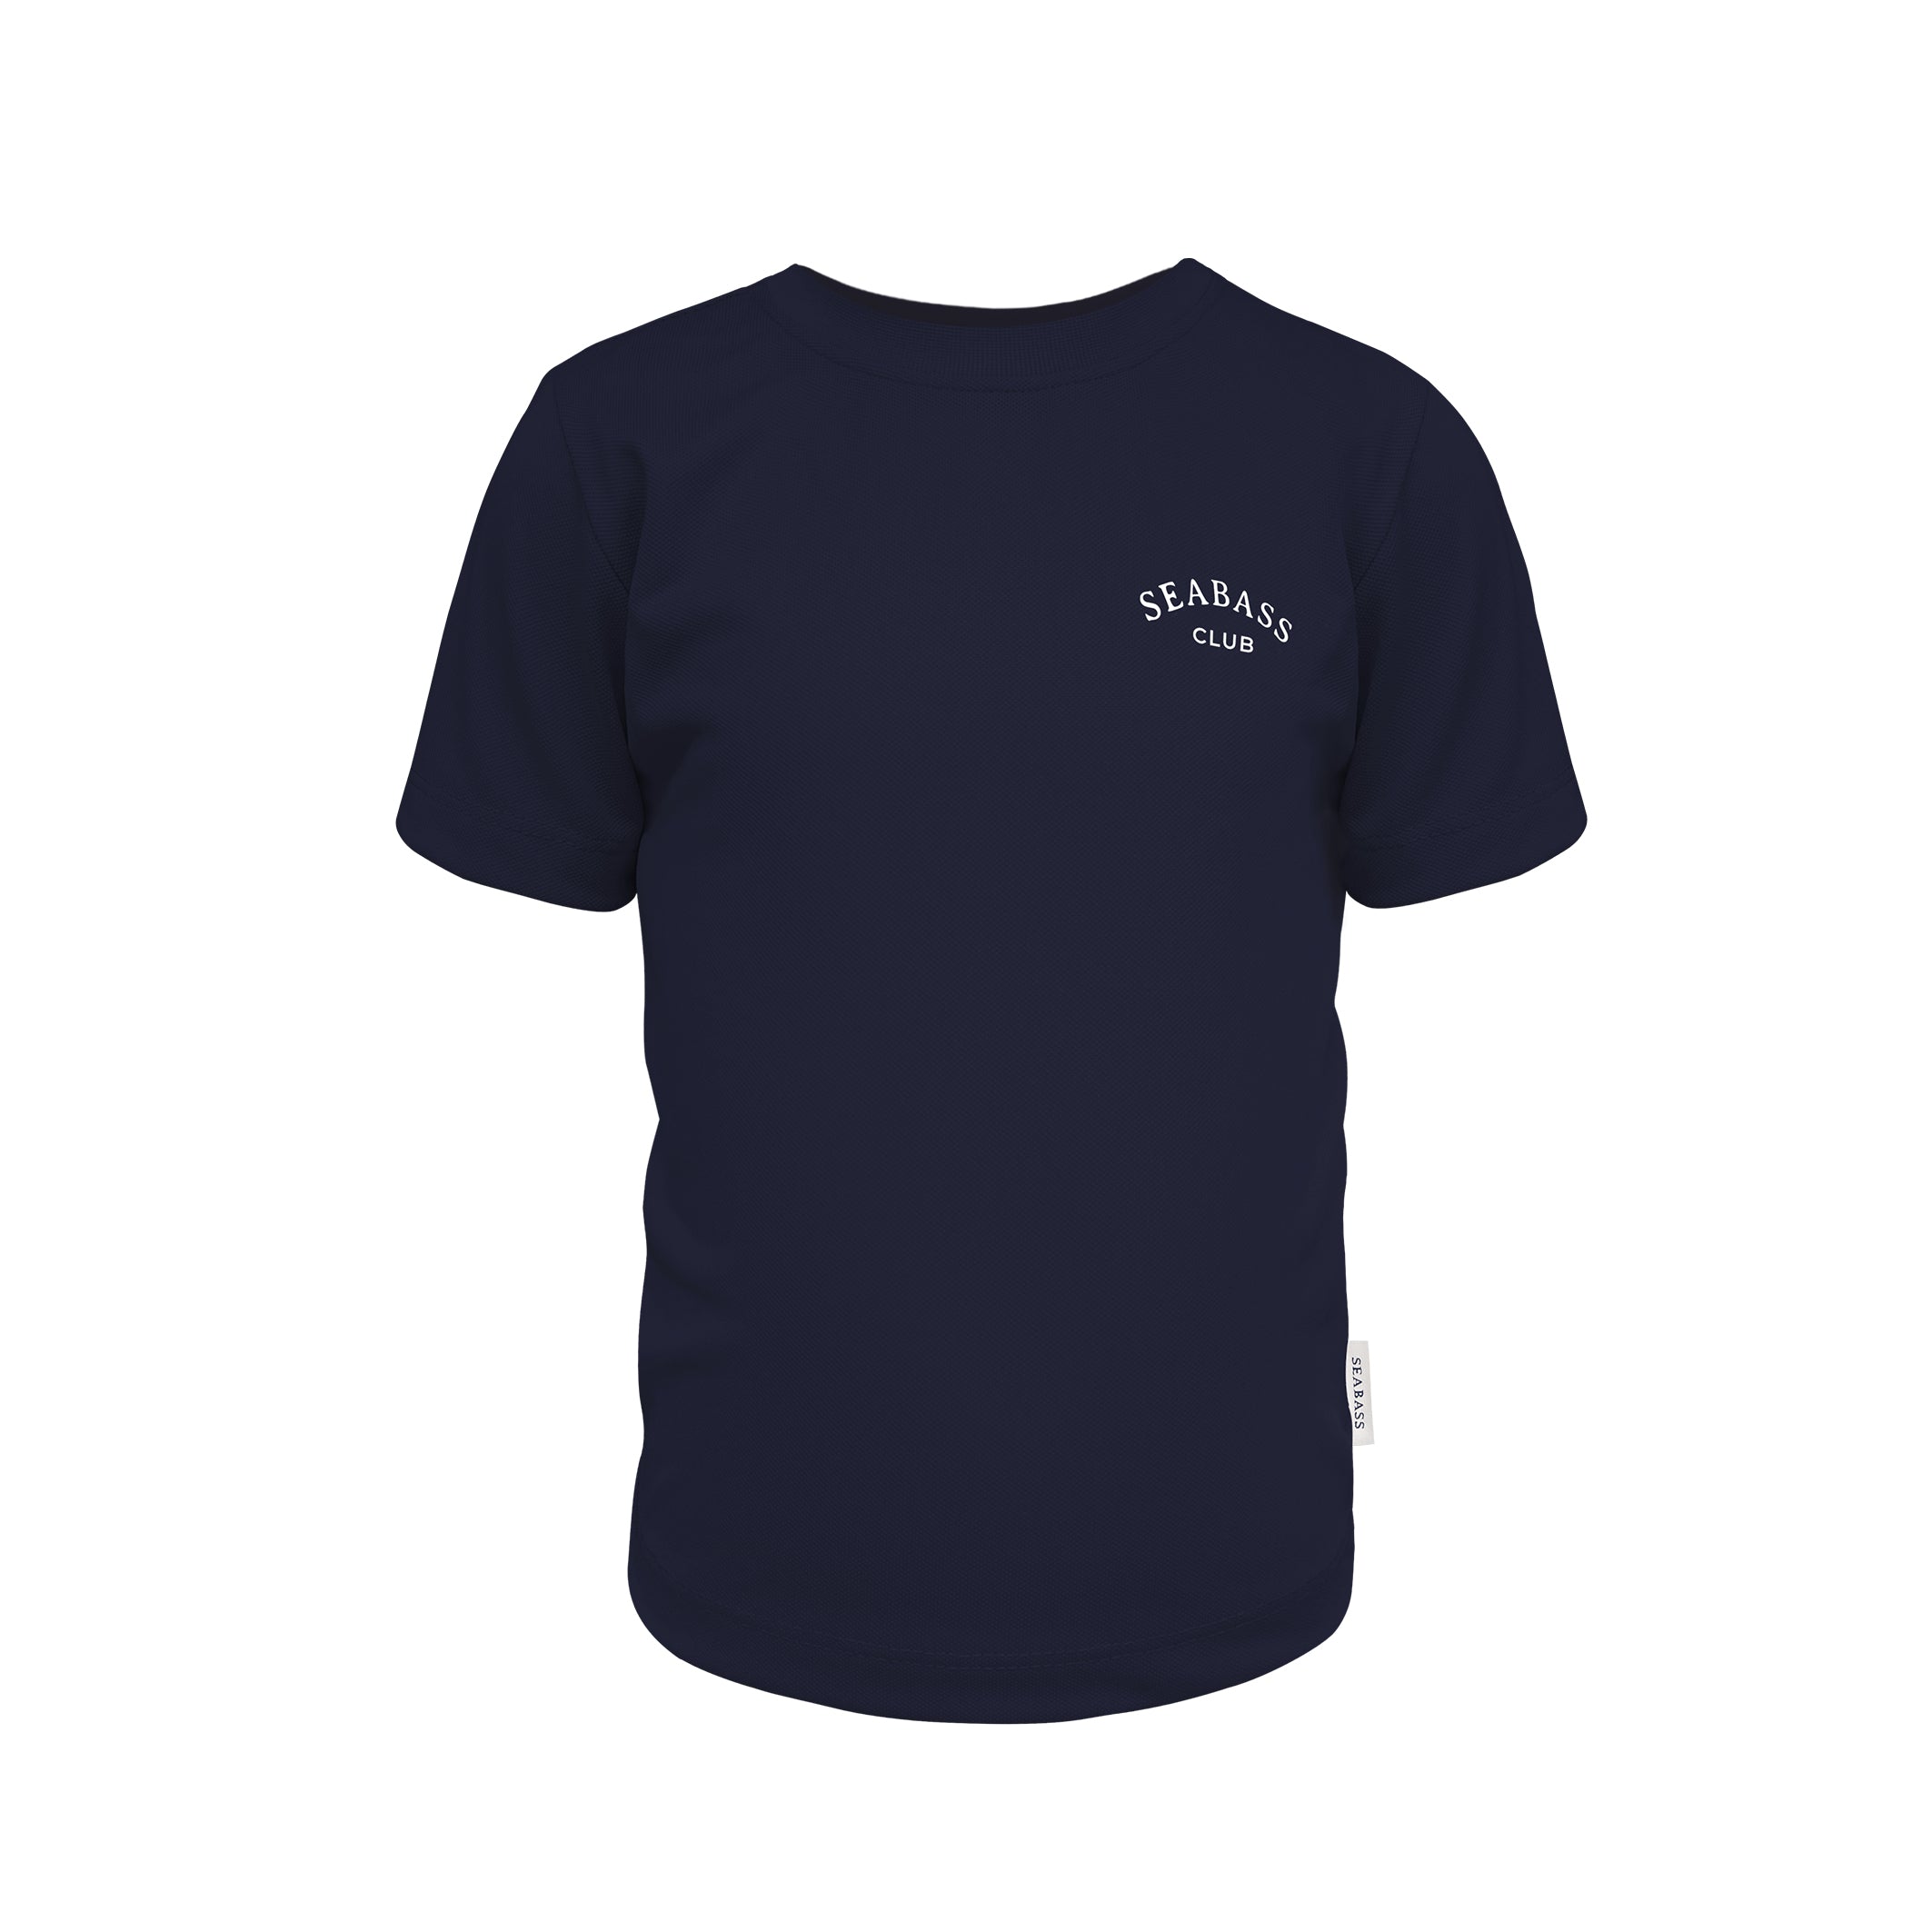 UV Schwimmset - Badeshort und T-Shirt Marineblau